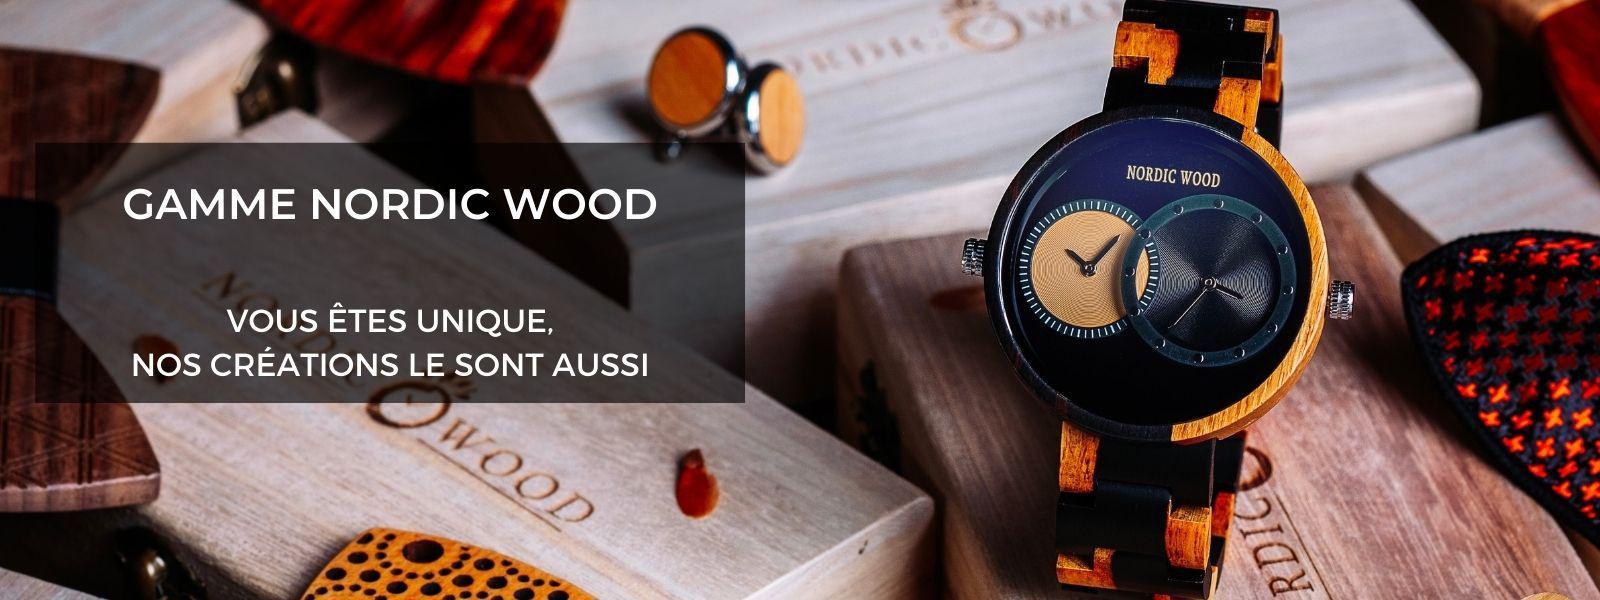 gamme produits nordic wood